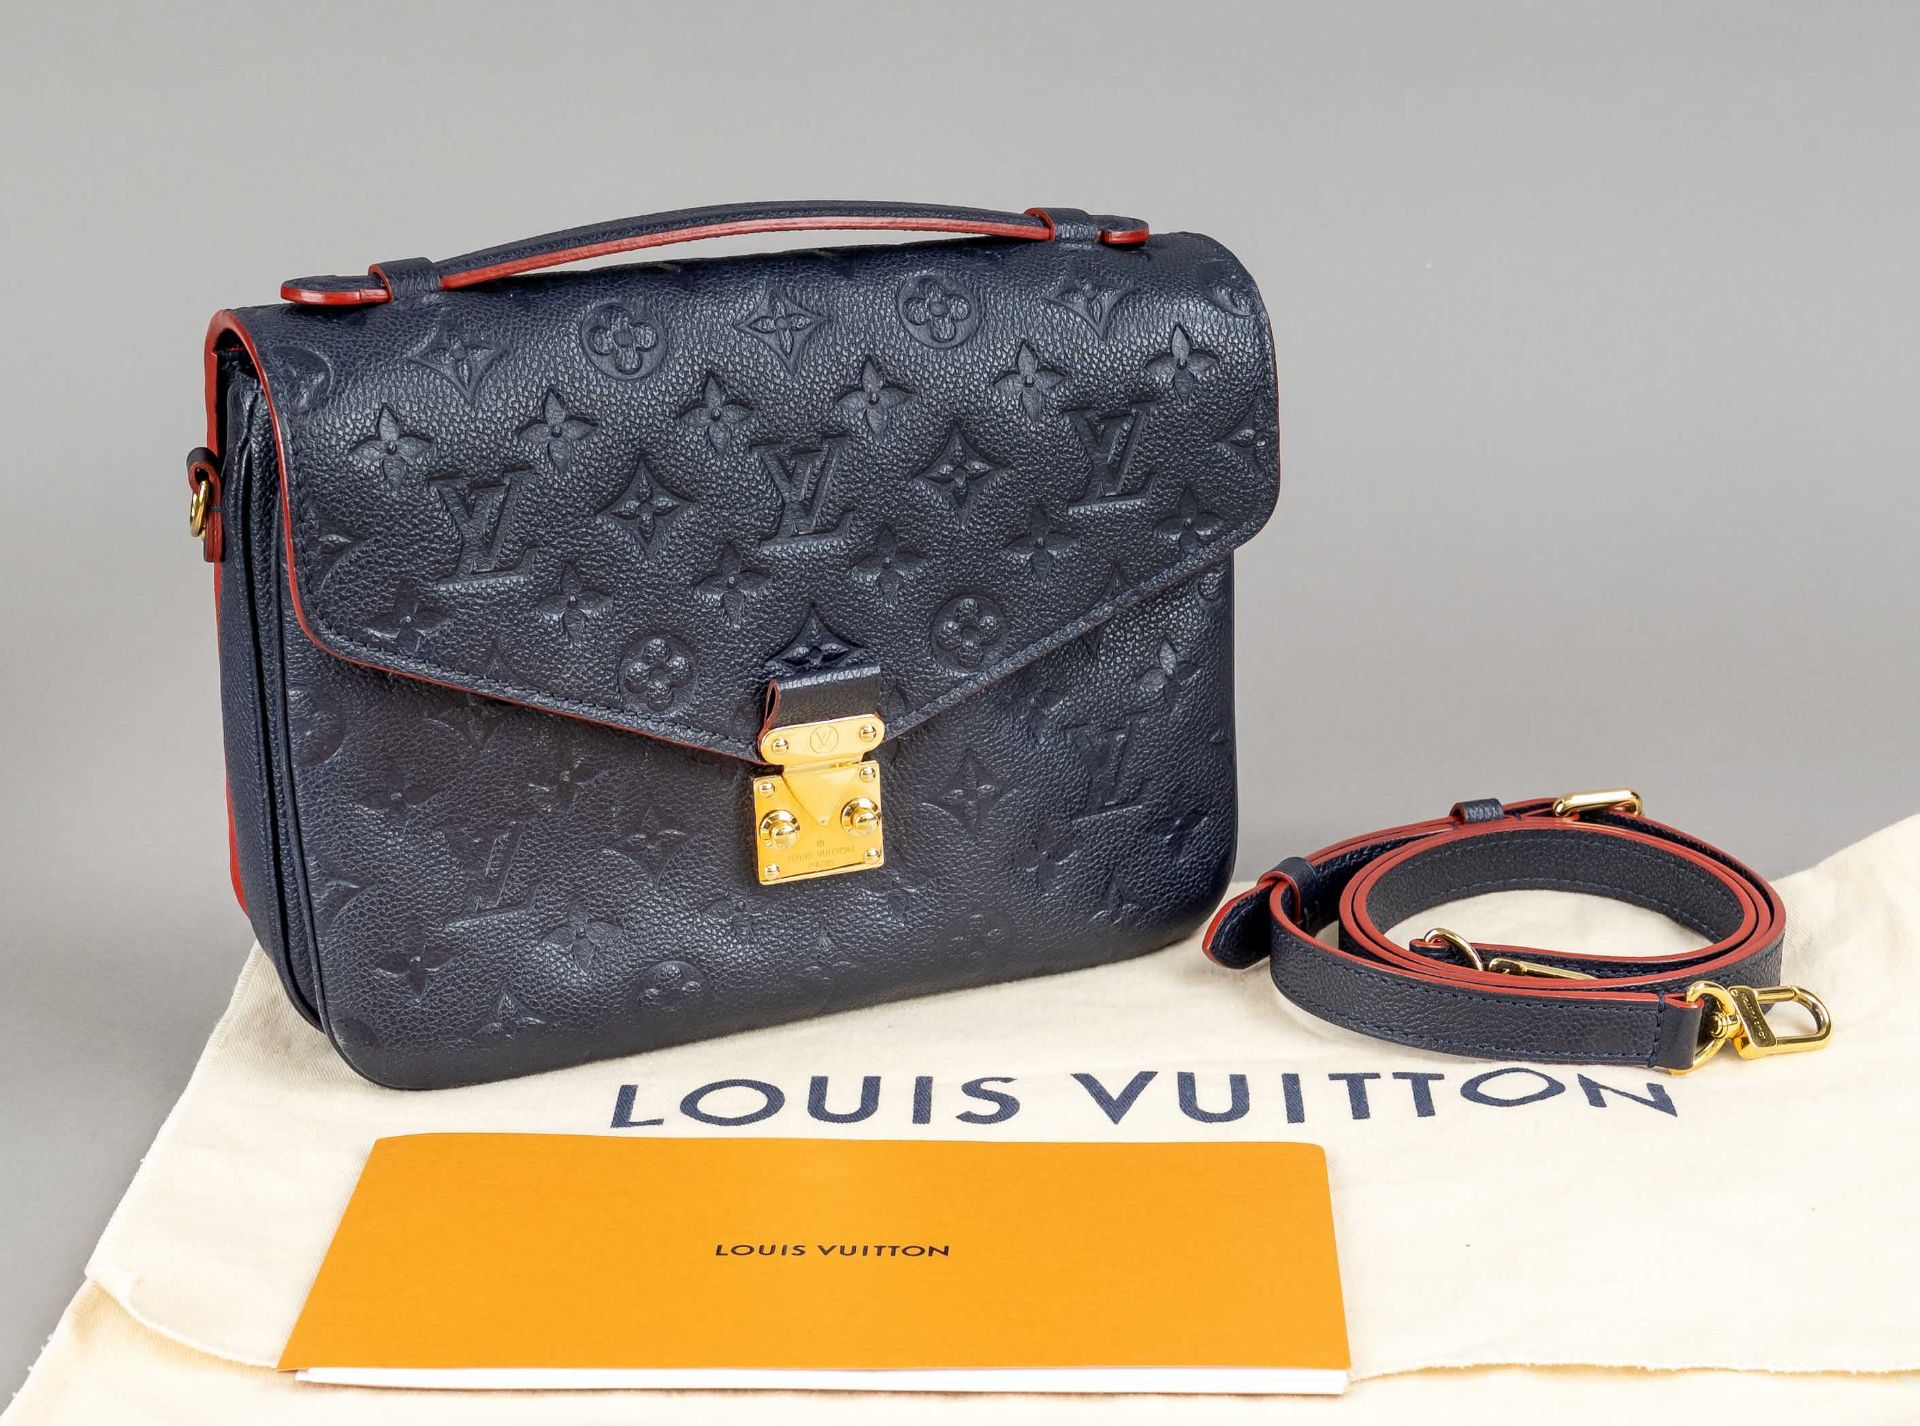 Louis Vuitton, Marine Rouge Pochette Metis Monogram Empreinte Bag, navy grained leather with